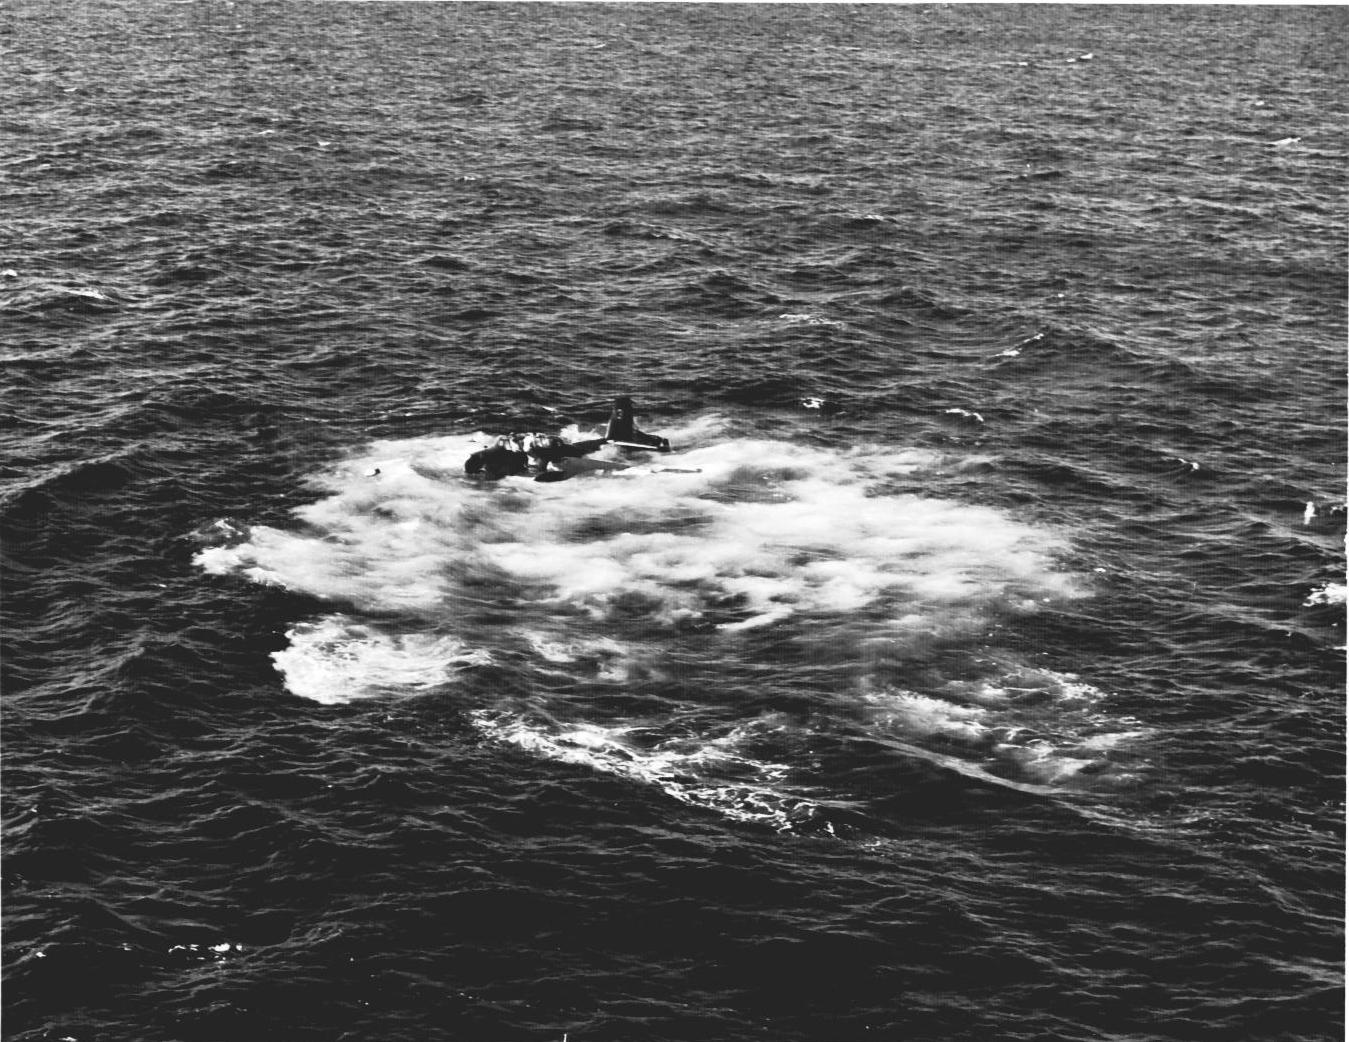 US Navy pilot Lt (jg) C. Clifton Francom unsuccessfully testing TBM Avenger torpedo bomber with experimental wing mounted radome aboard Ticonderoga, 4 Jul 1944, photo 5 of 5